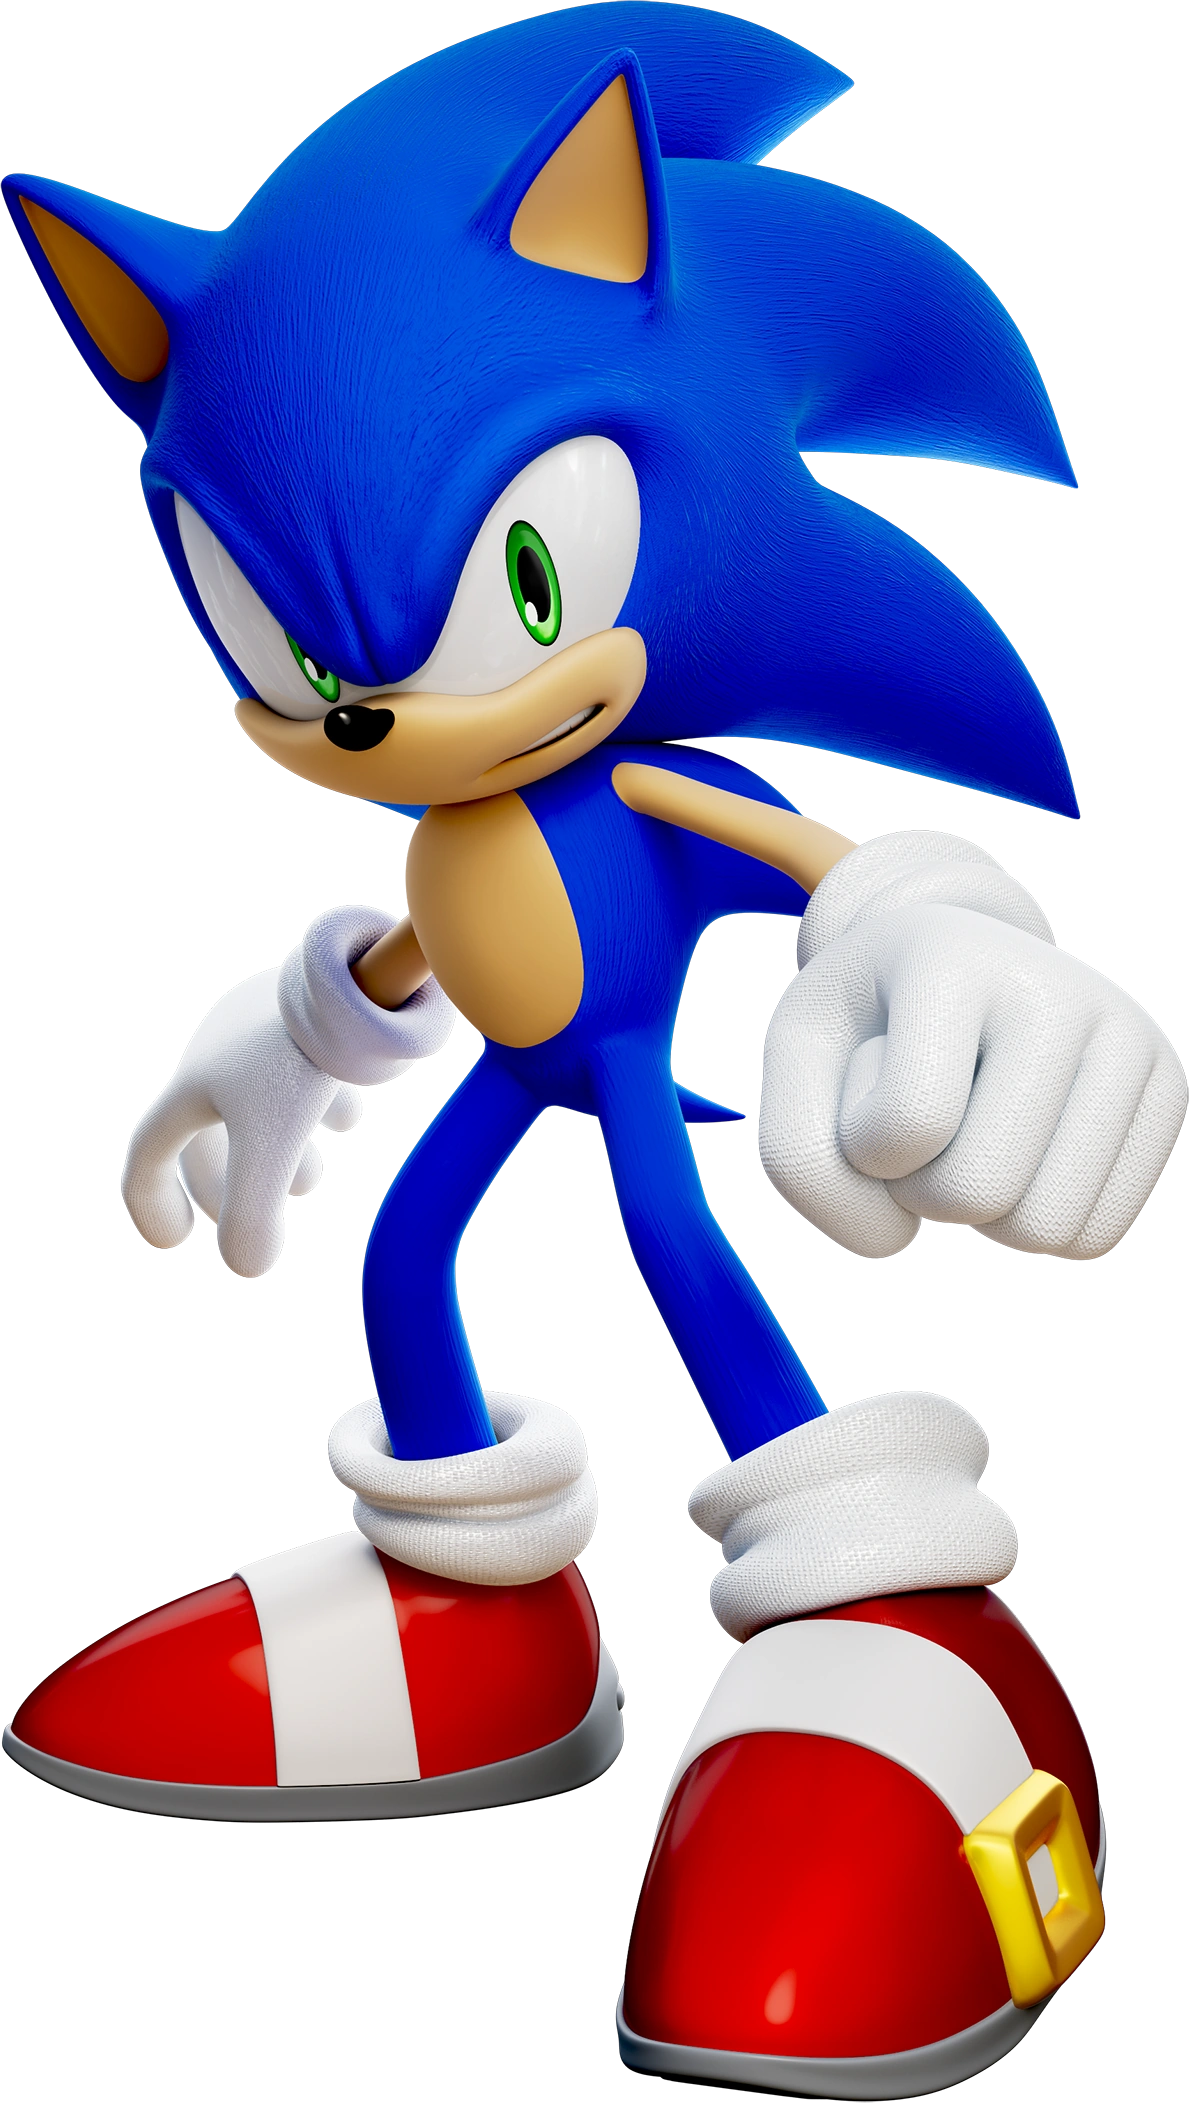 Sonic Origins - Wikipedia